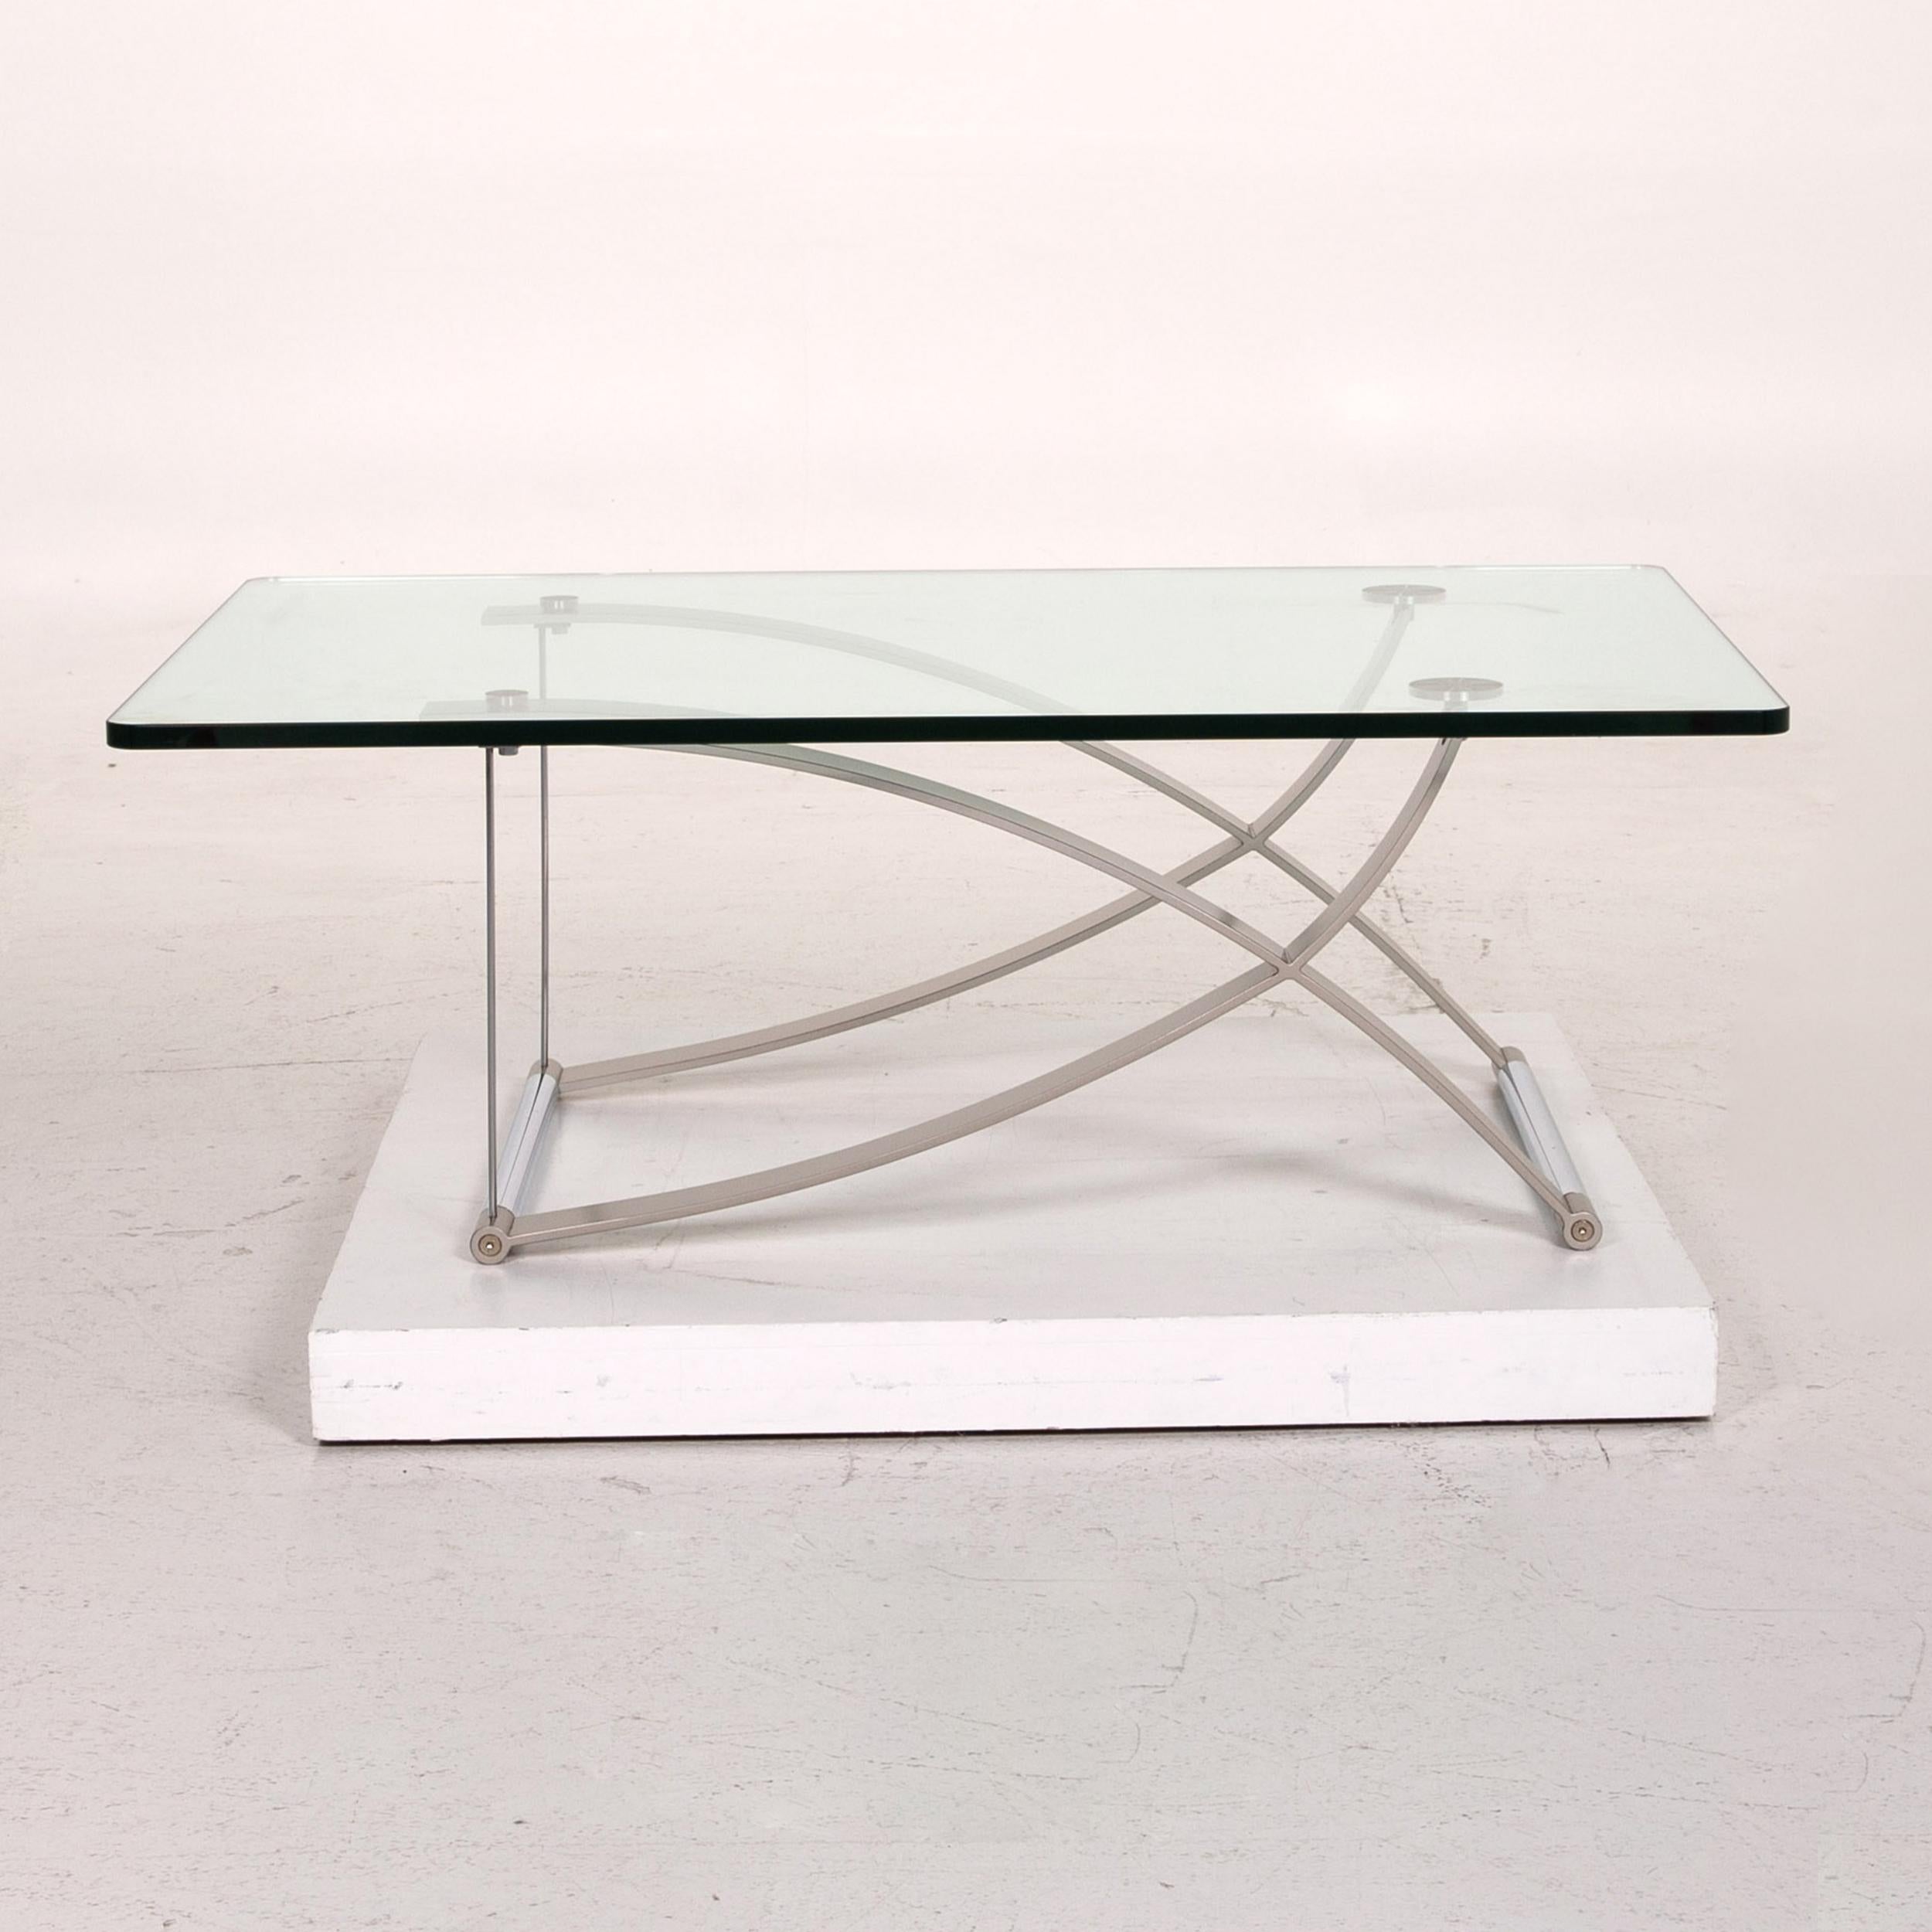 German Rolf Benz RB 1150 Glass Coffee Table Metal Table